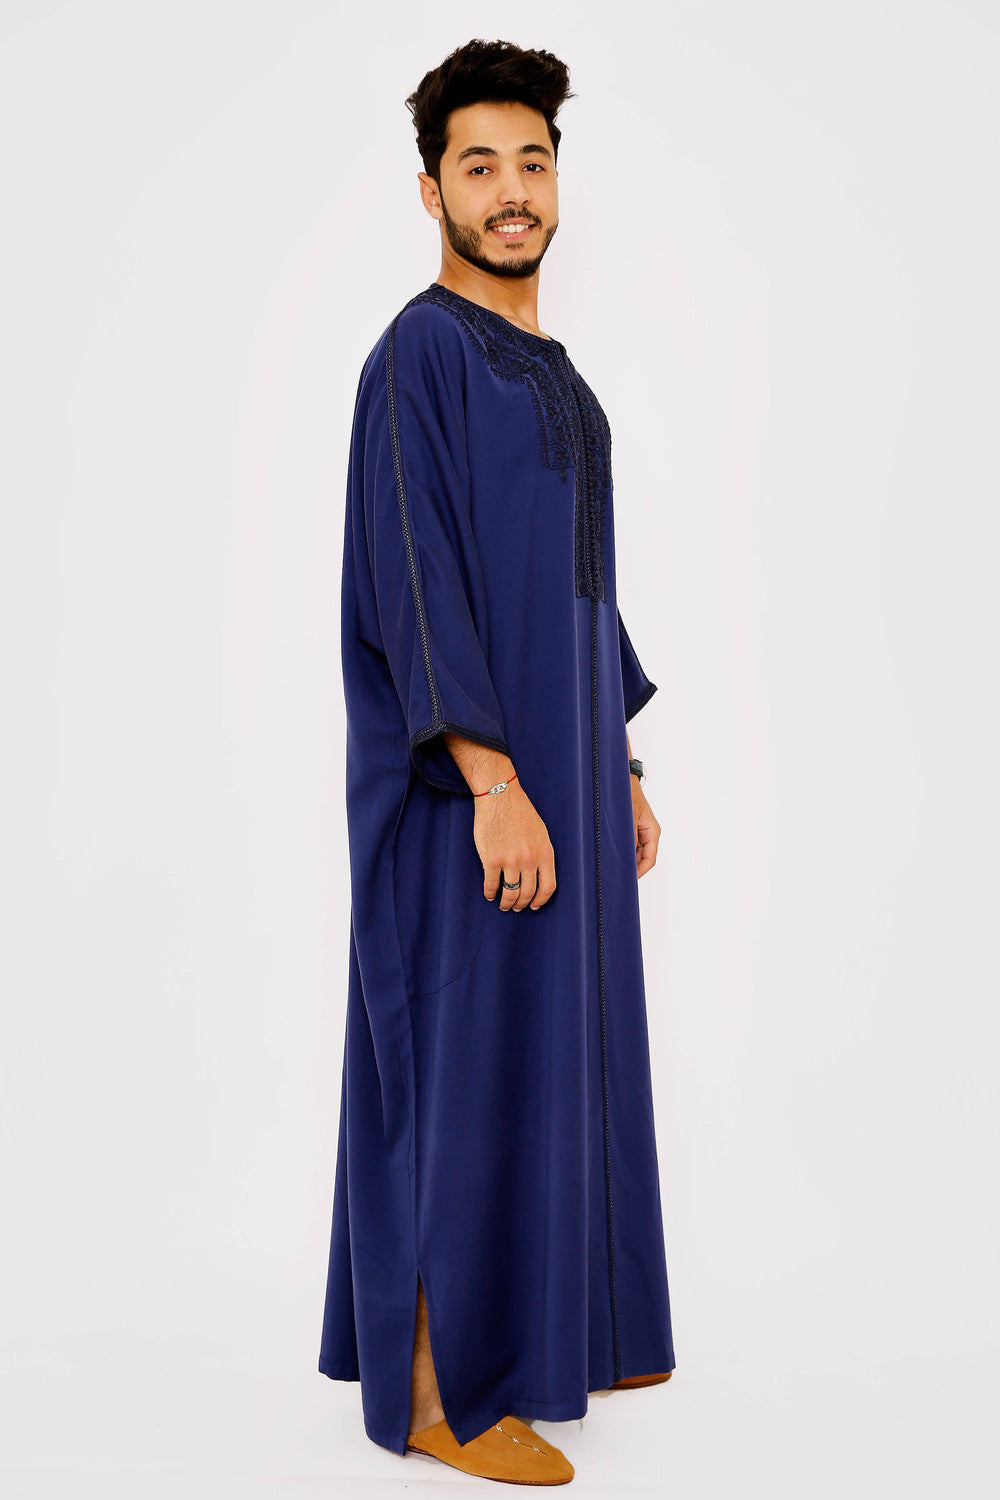 Gandoura Badii Men's Long Robe Long Sleeve thobe in Navy Blue